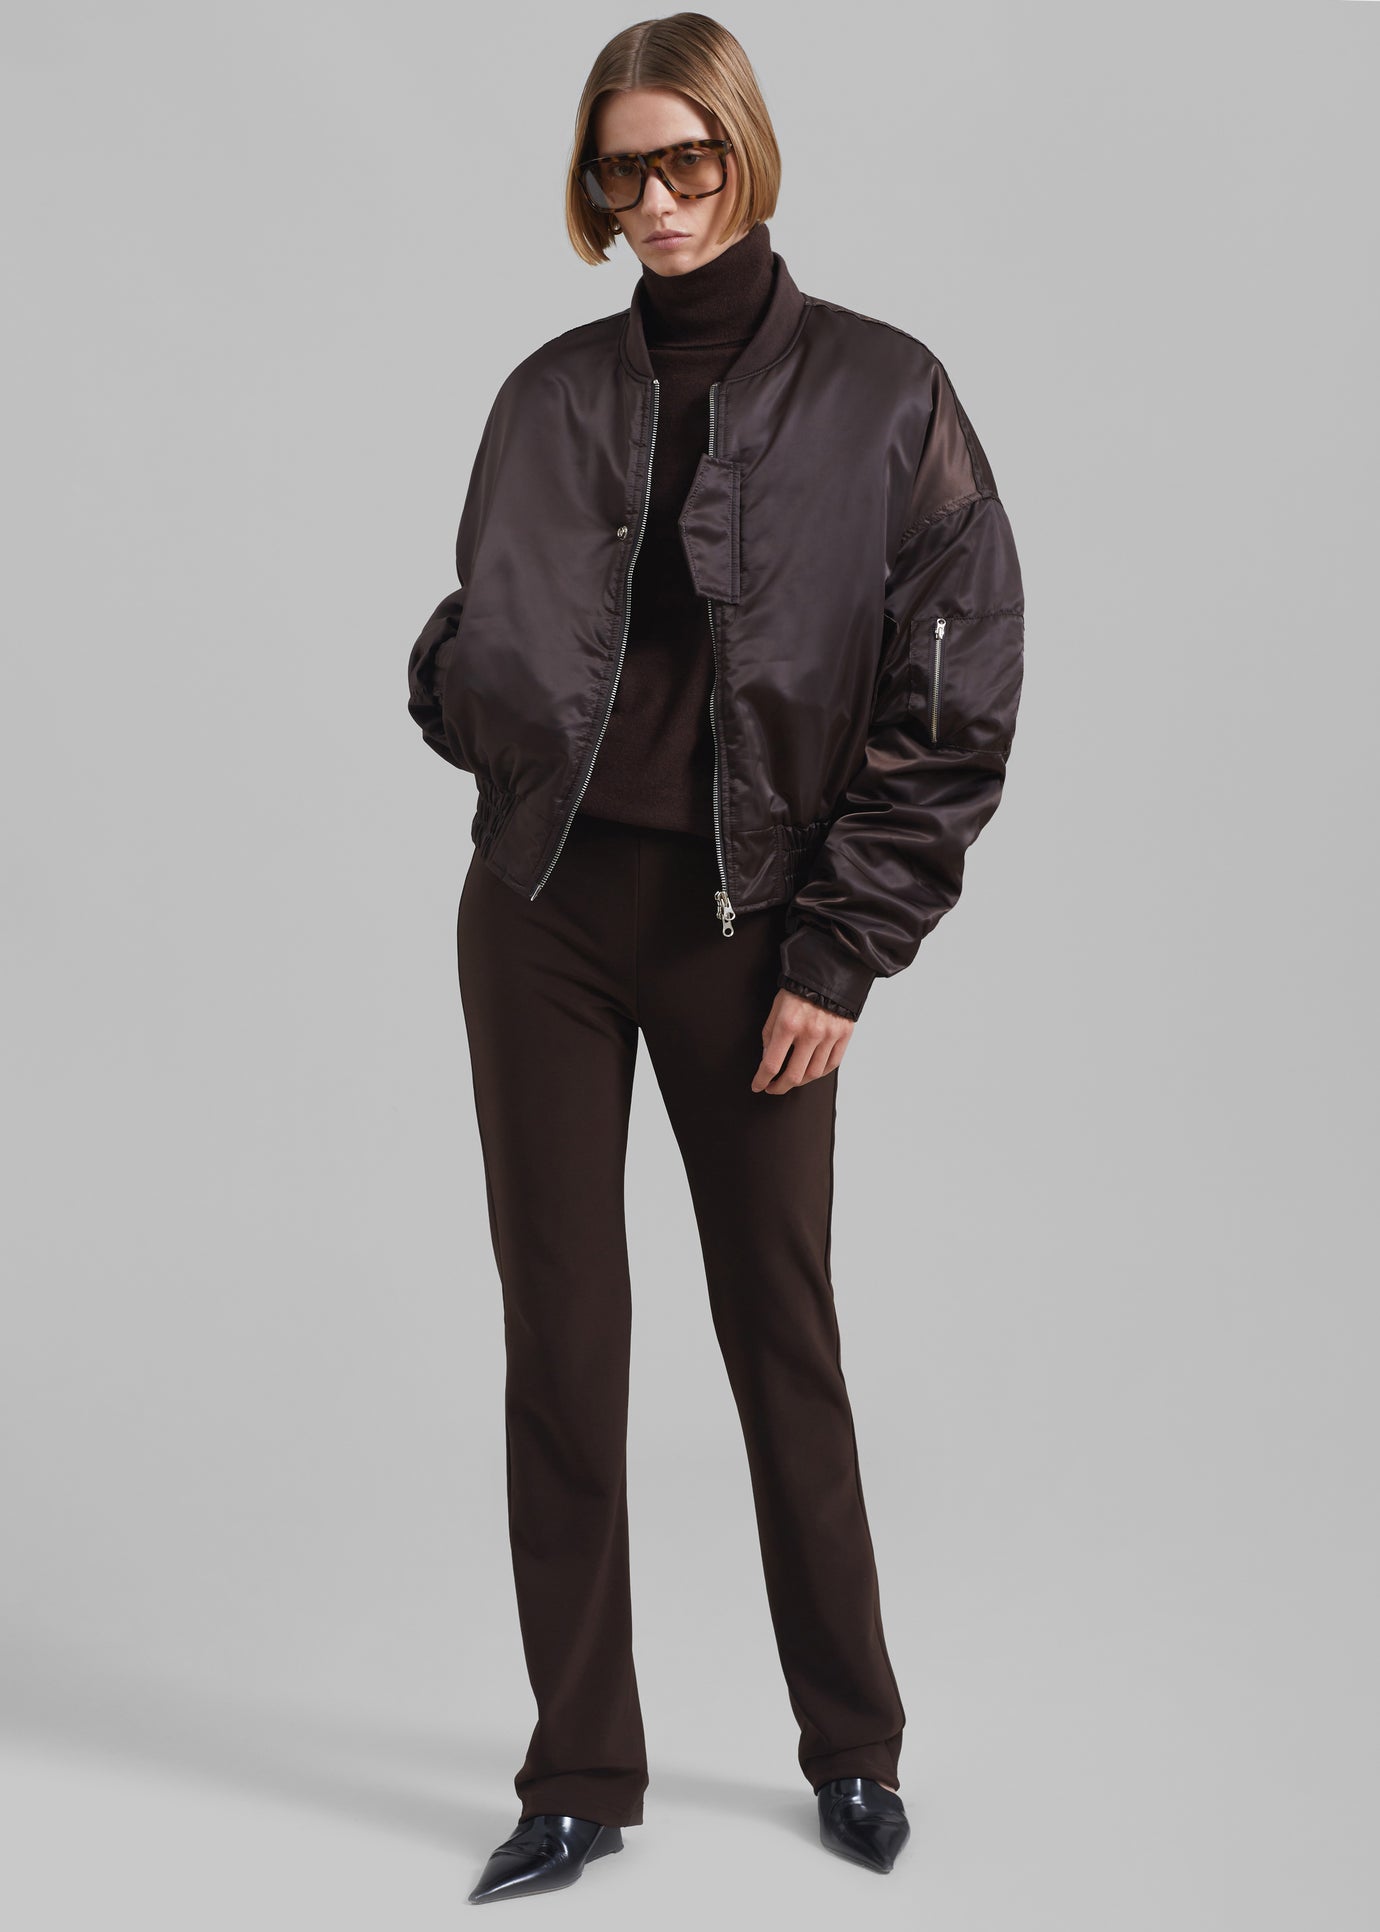 Women\'s Coats, Jackets, Trench The 2 Frankie Shop – Blazer Page & –